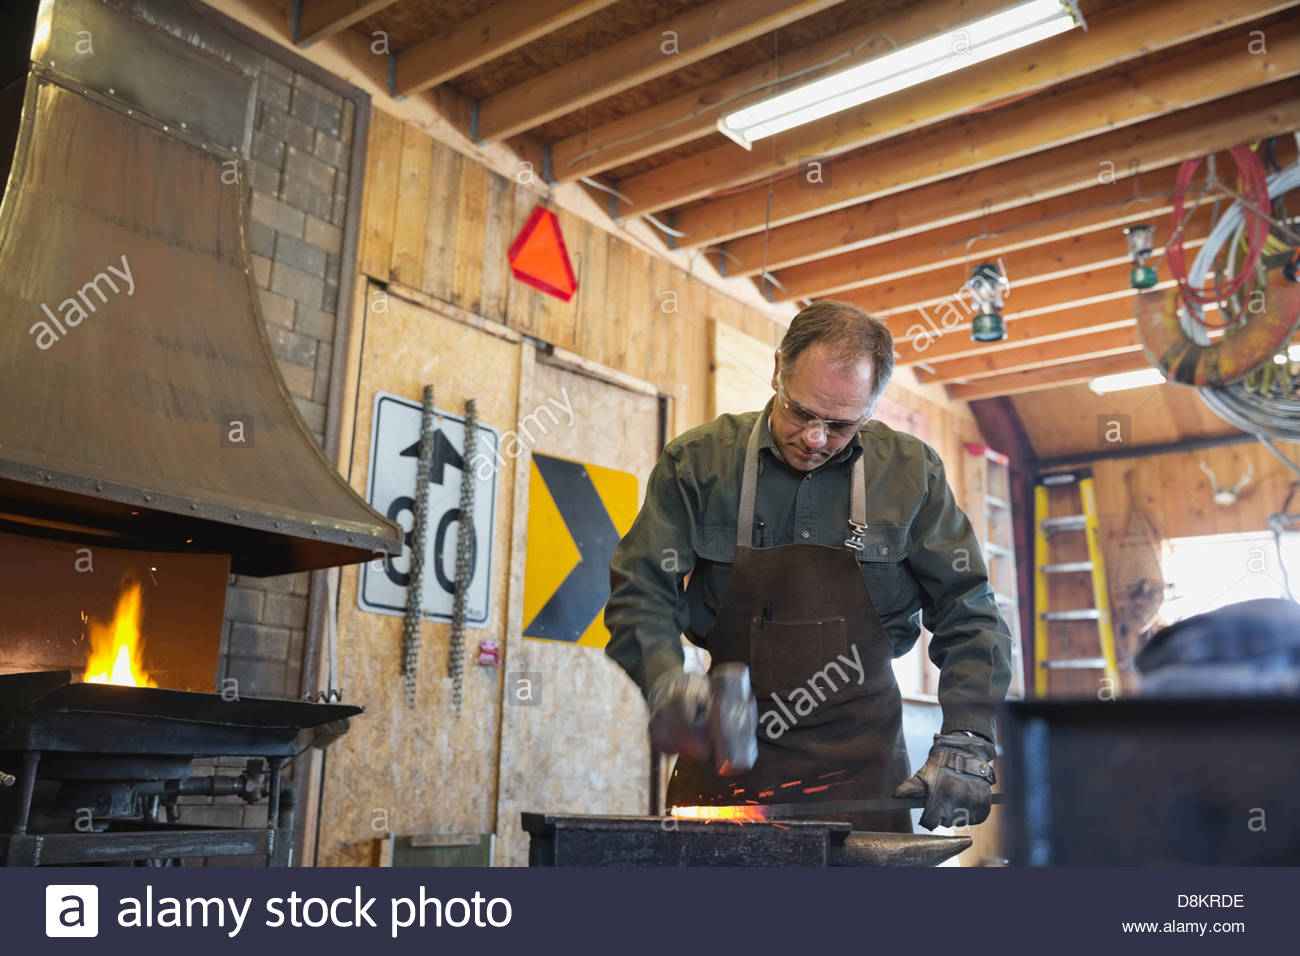 Metalworker hammering hot metal at workshop Stock Photo